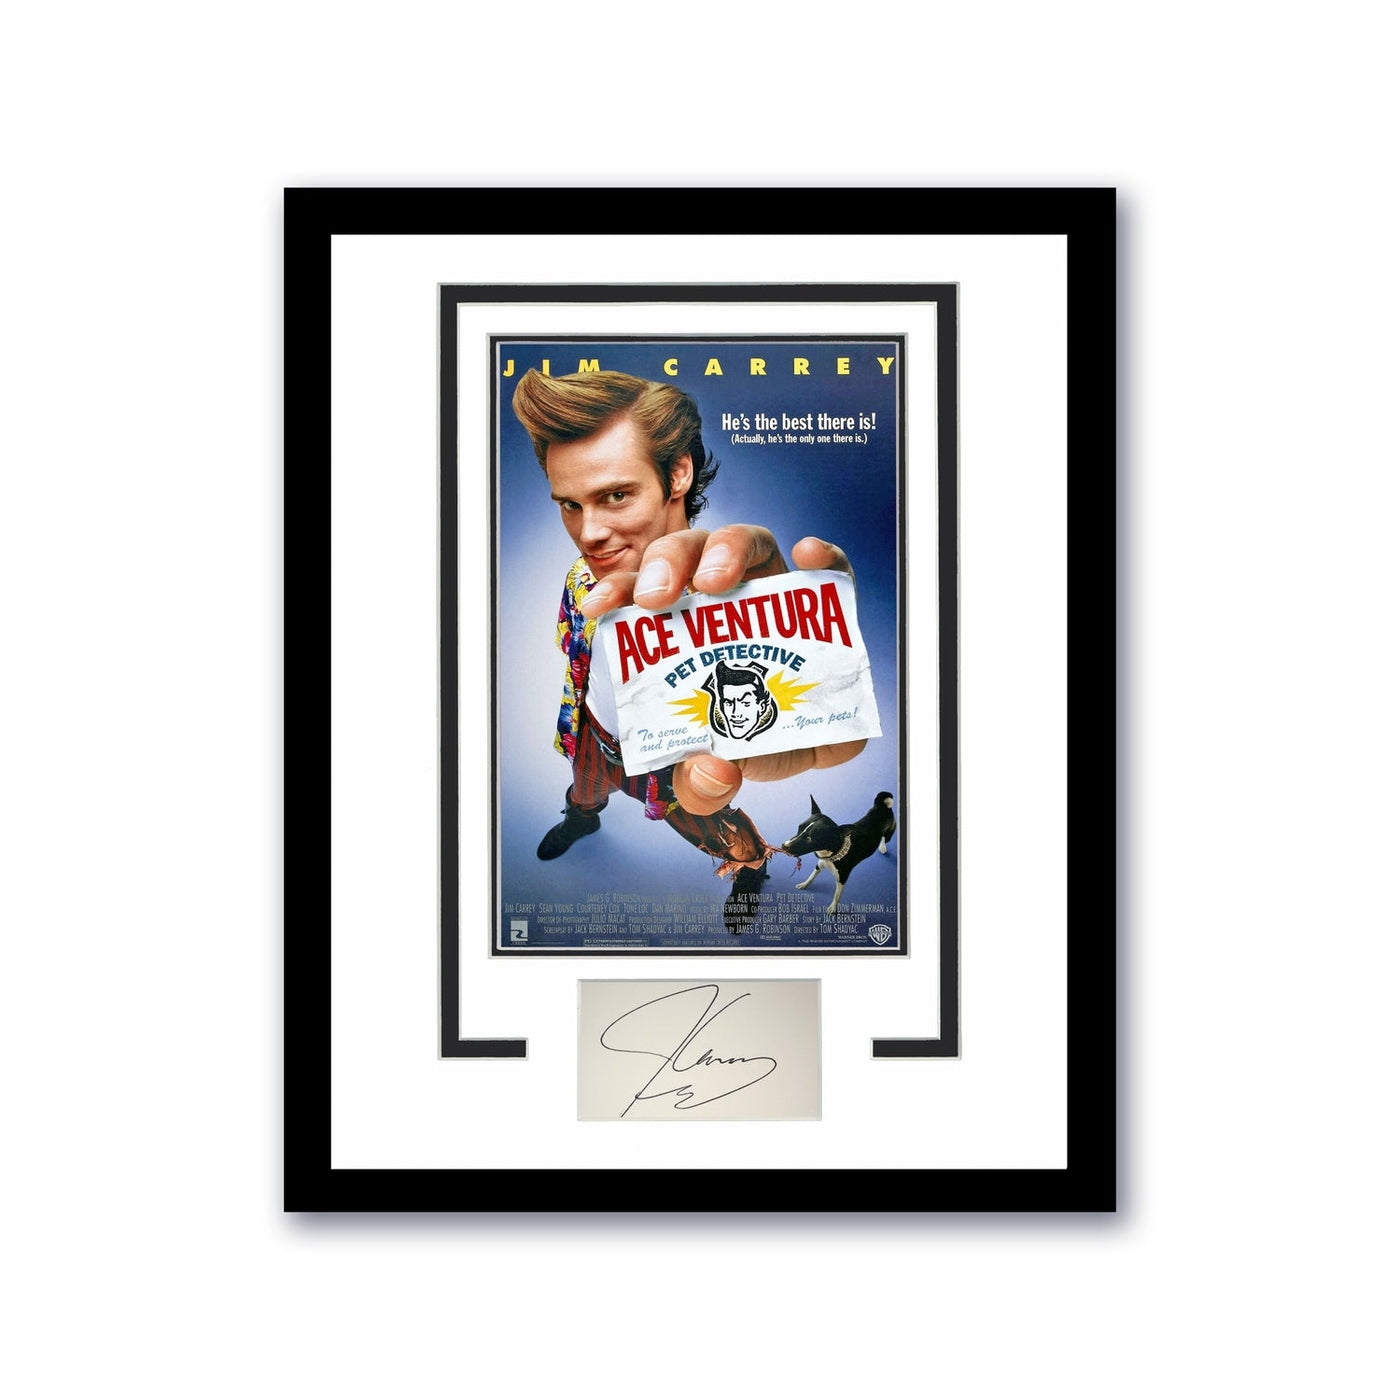 Ace Ventura Jim Carrey Autographed Signed 11x14 Framed Poster Photo ACOA